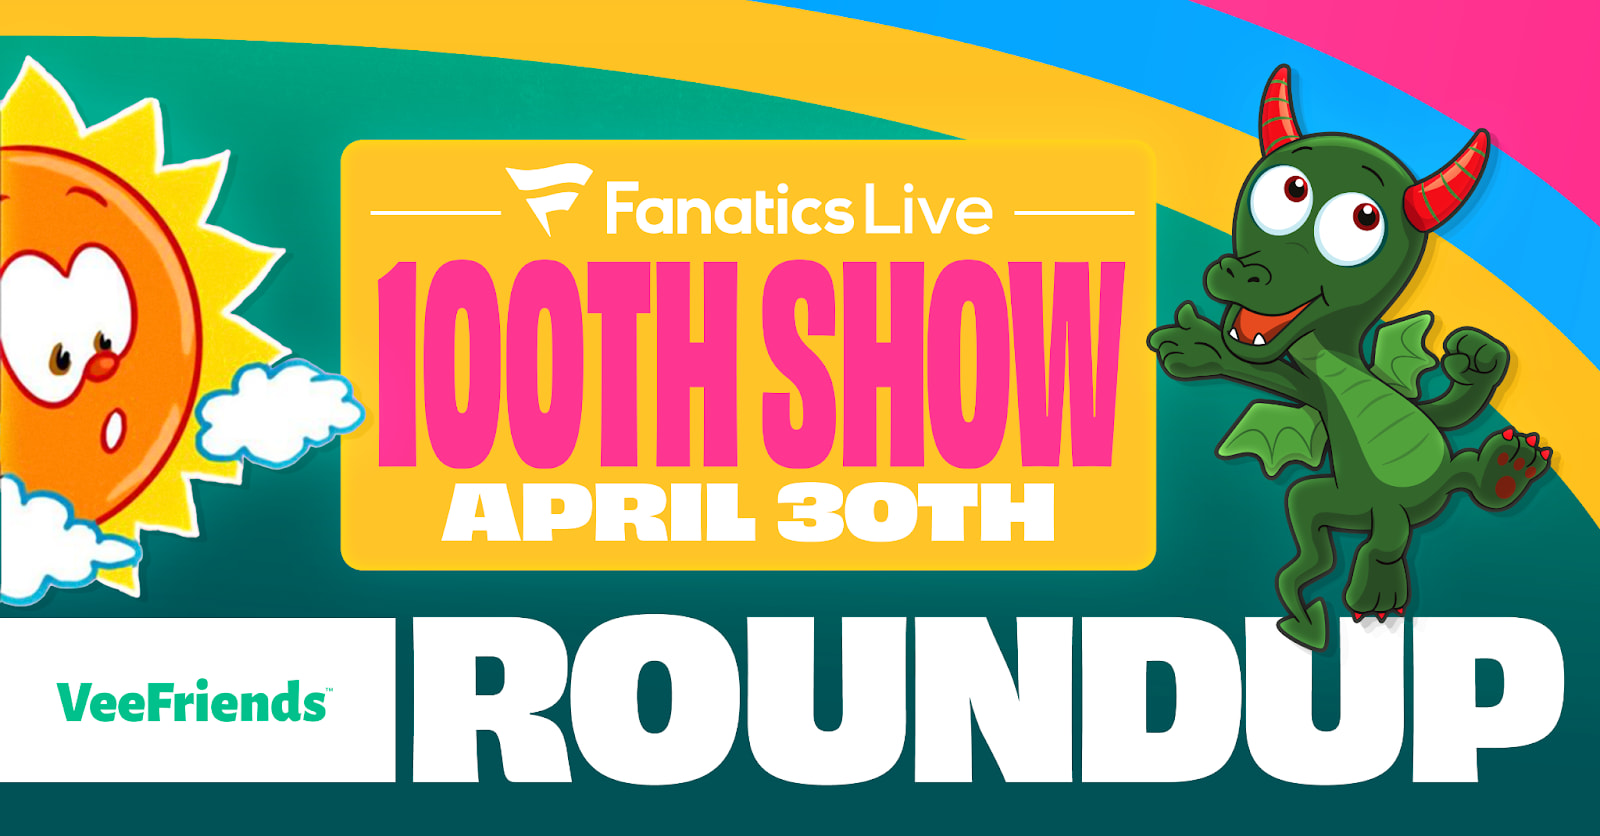 Weekly Roundup: VeeFriends Vending 101 With Scott Jochim, Upcoming 100th Stream on Fanatics Live…